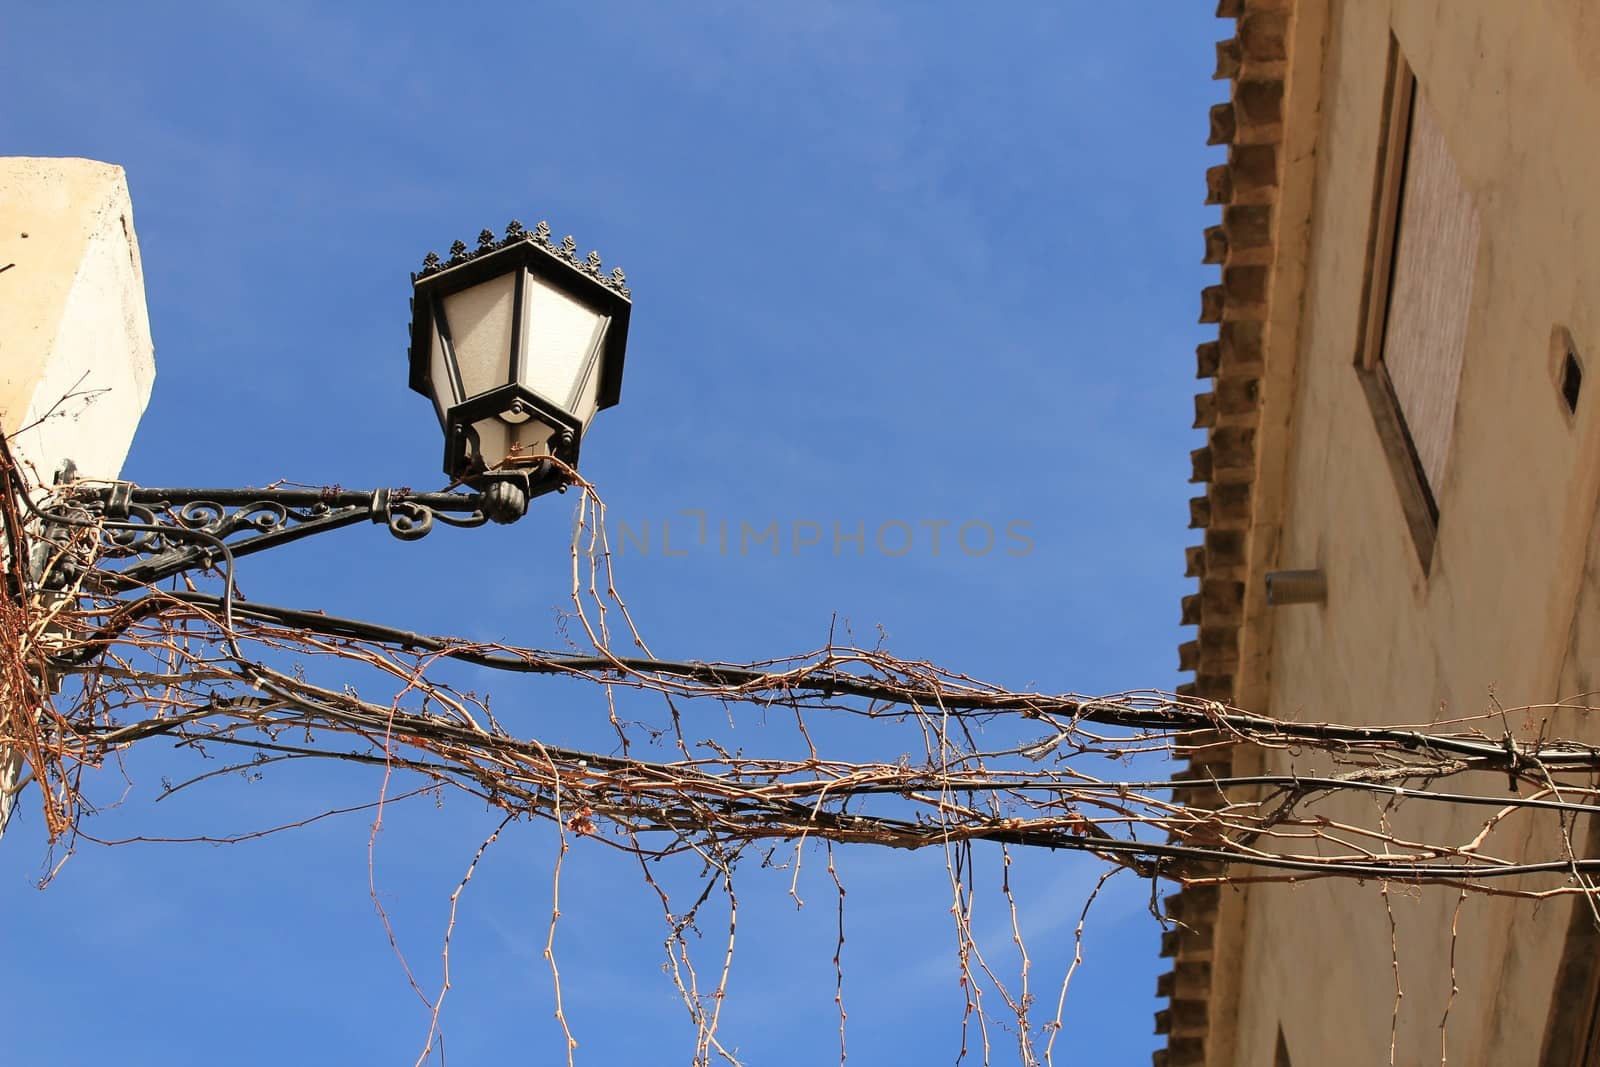 Streetlight and vine under blue sky by soniabonet